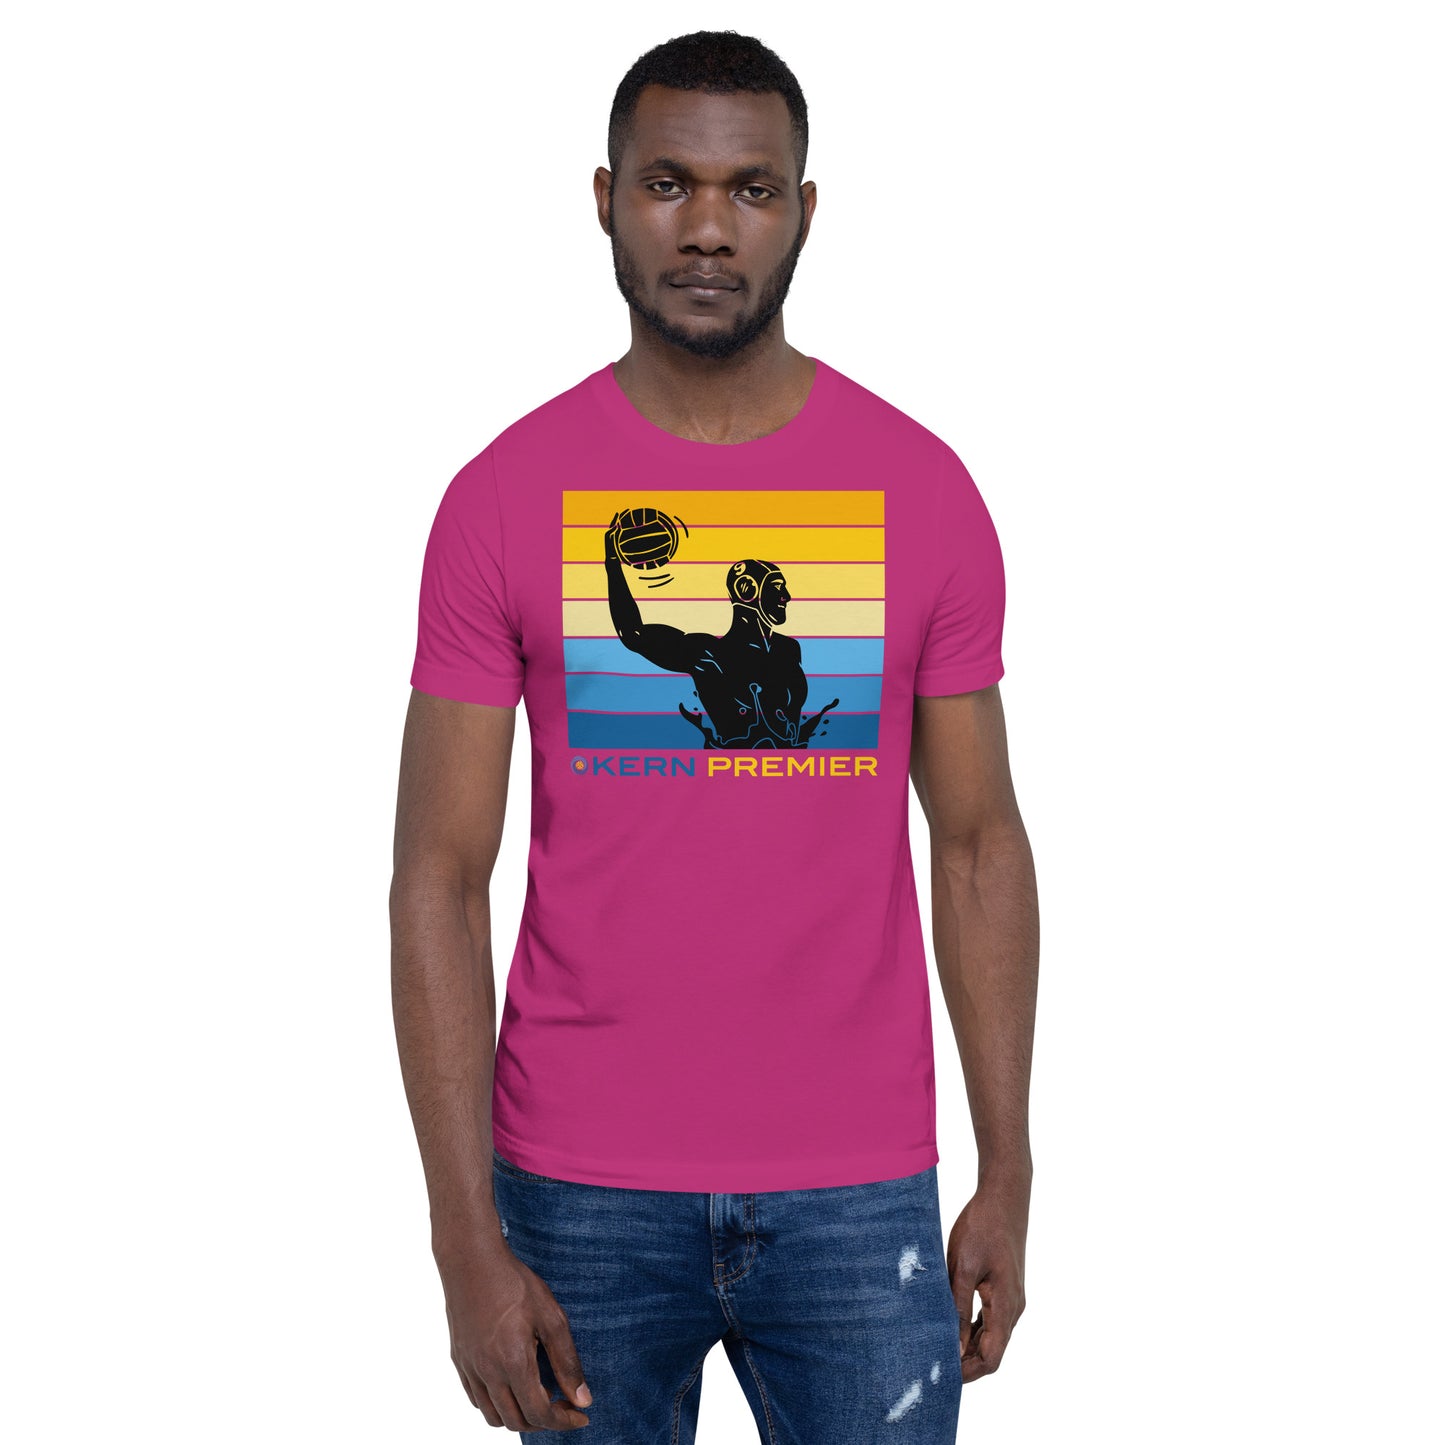 Kern Premier 7 color square horizontal with bottom logo male silhouette - Unisex Soft T-shirt - Bella Canvas 3001